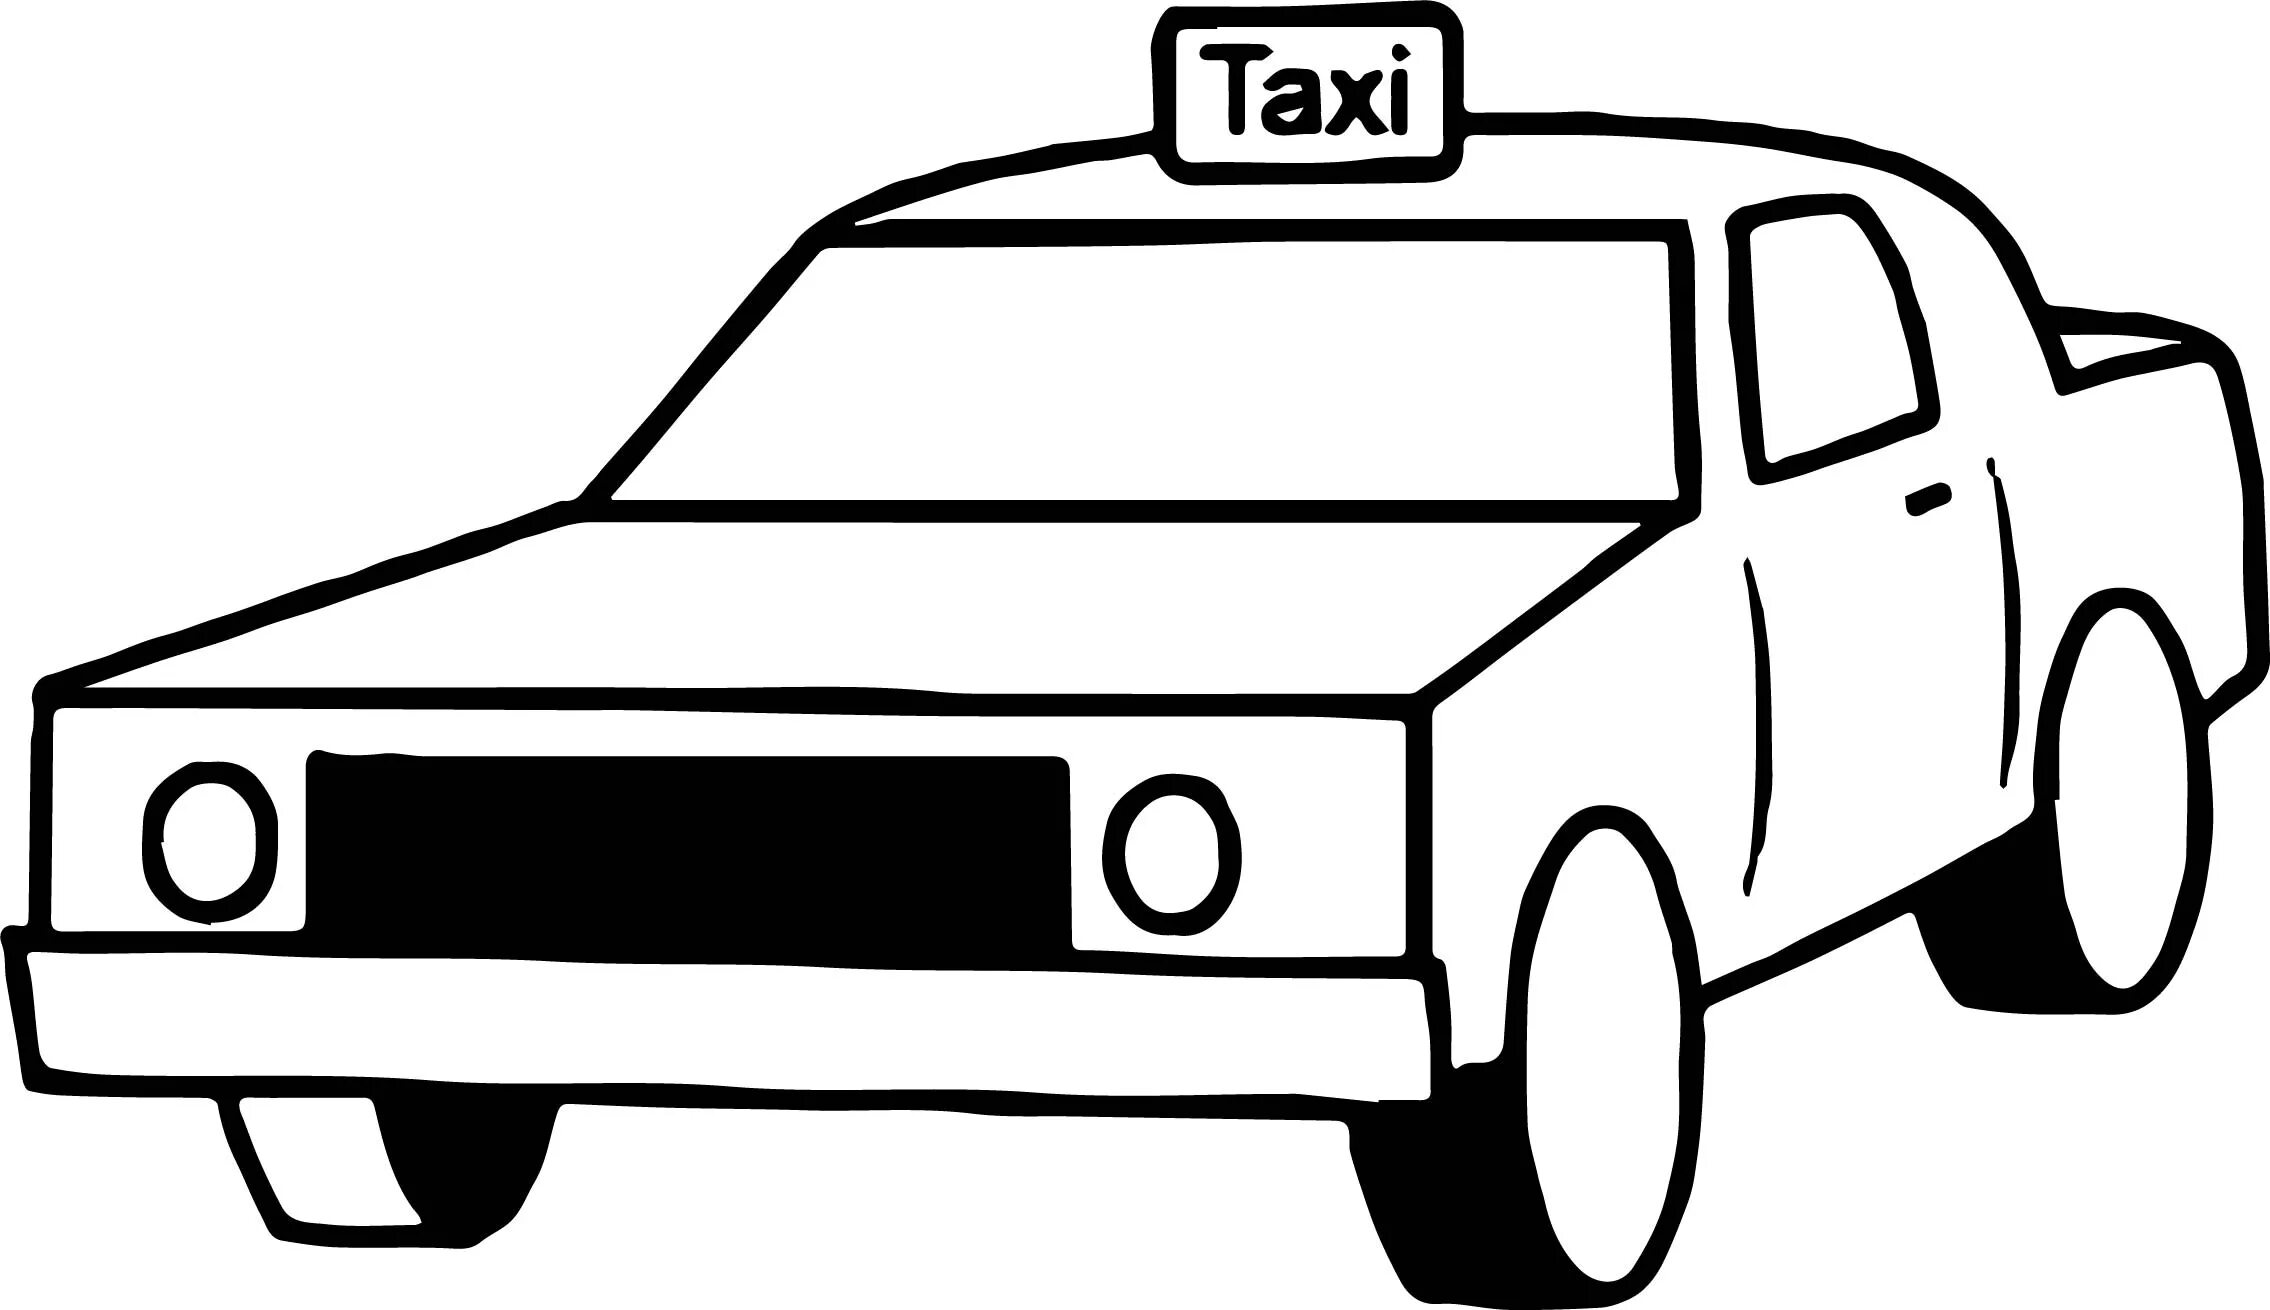 Taxi car #2